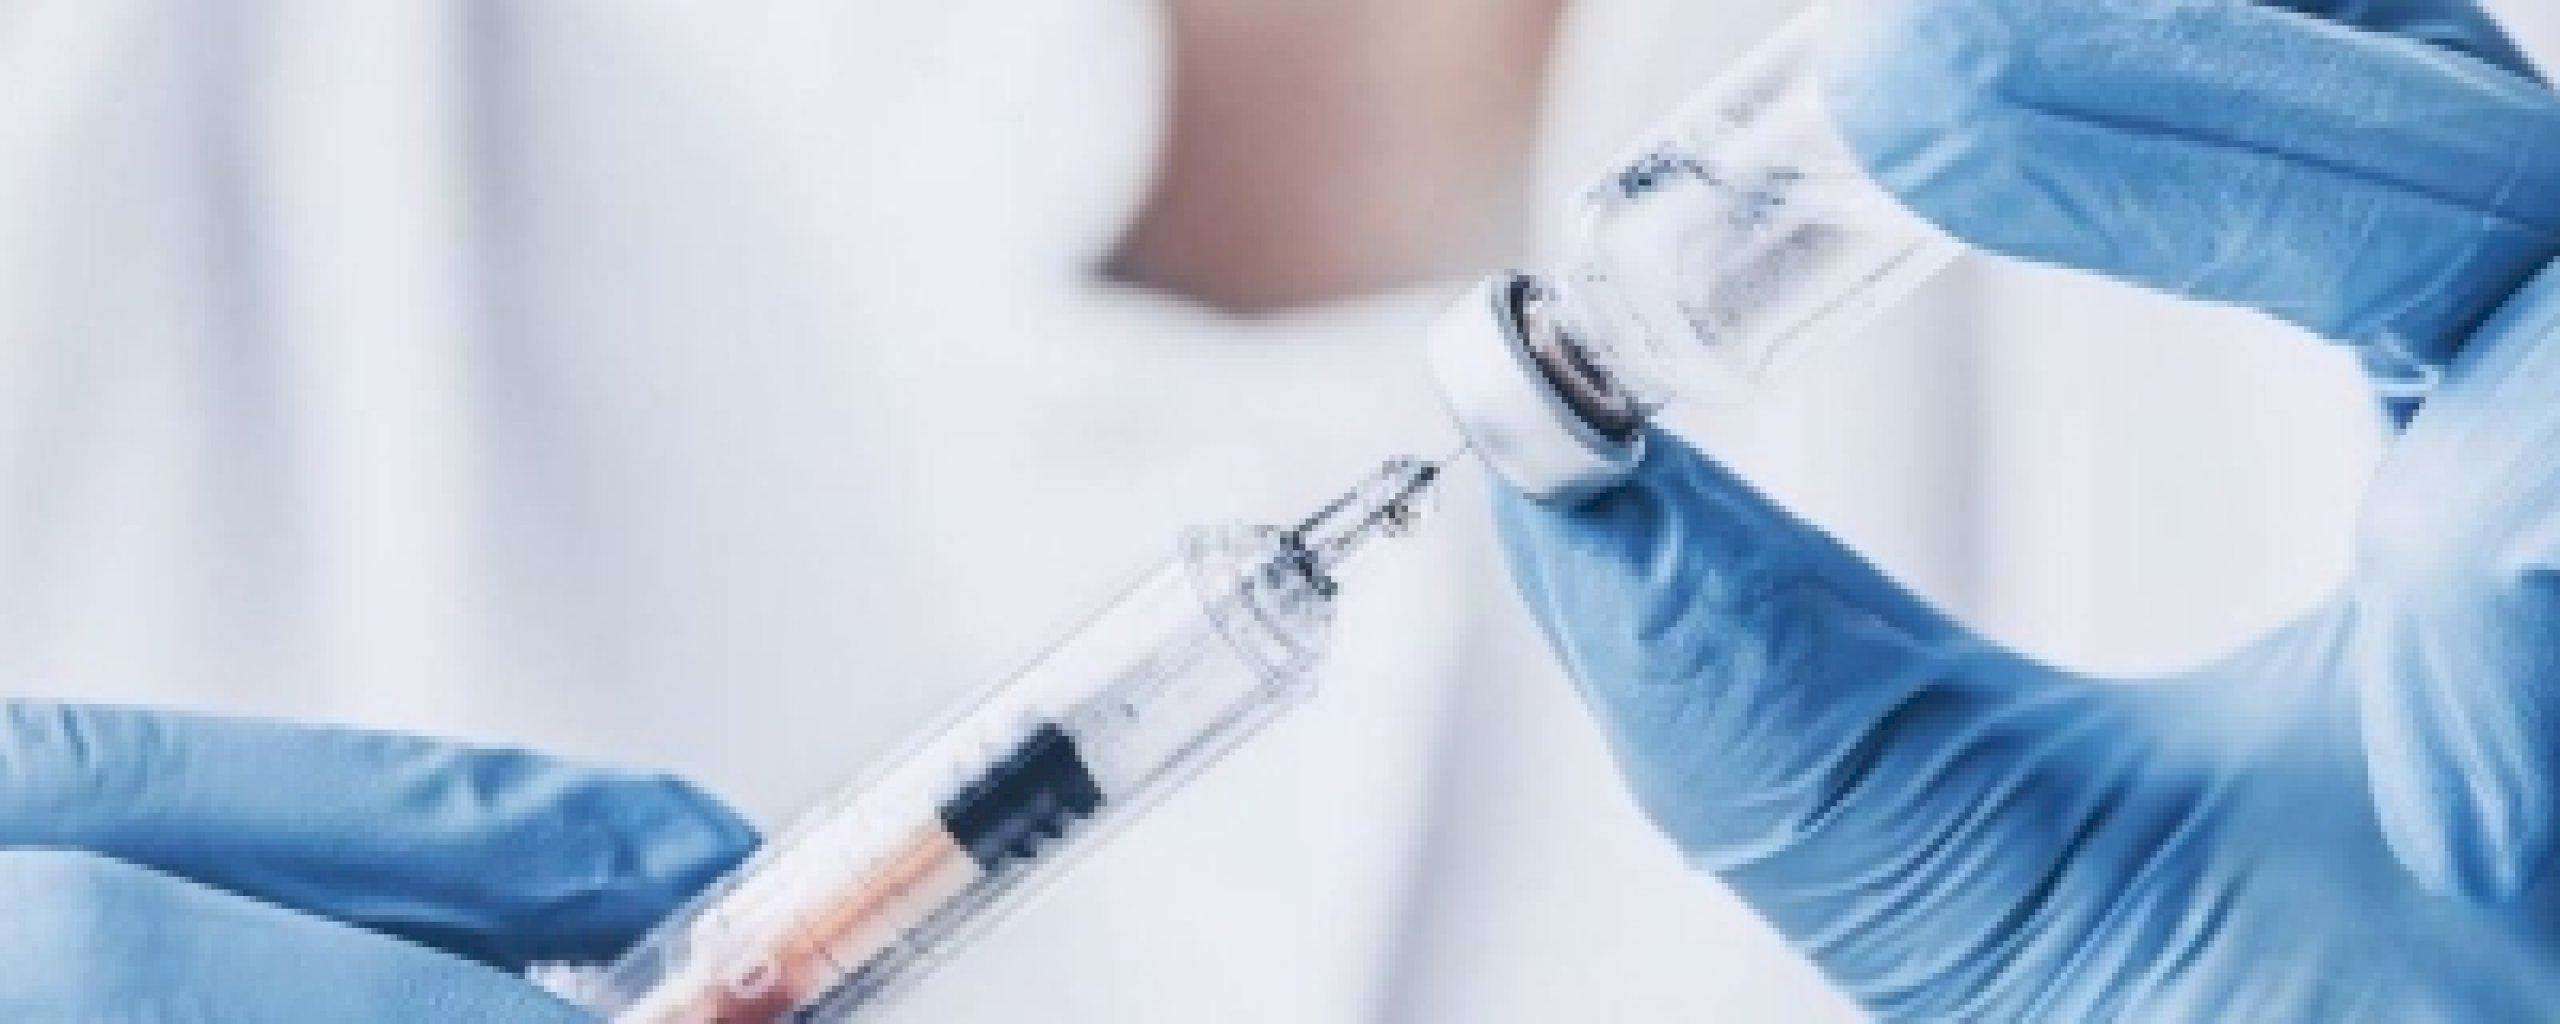 वैश्विक प्रतिक्रिया को बढ़ावा देते चीनी-निर्मित Vaccine